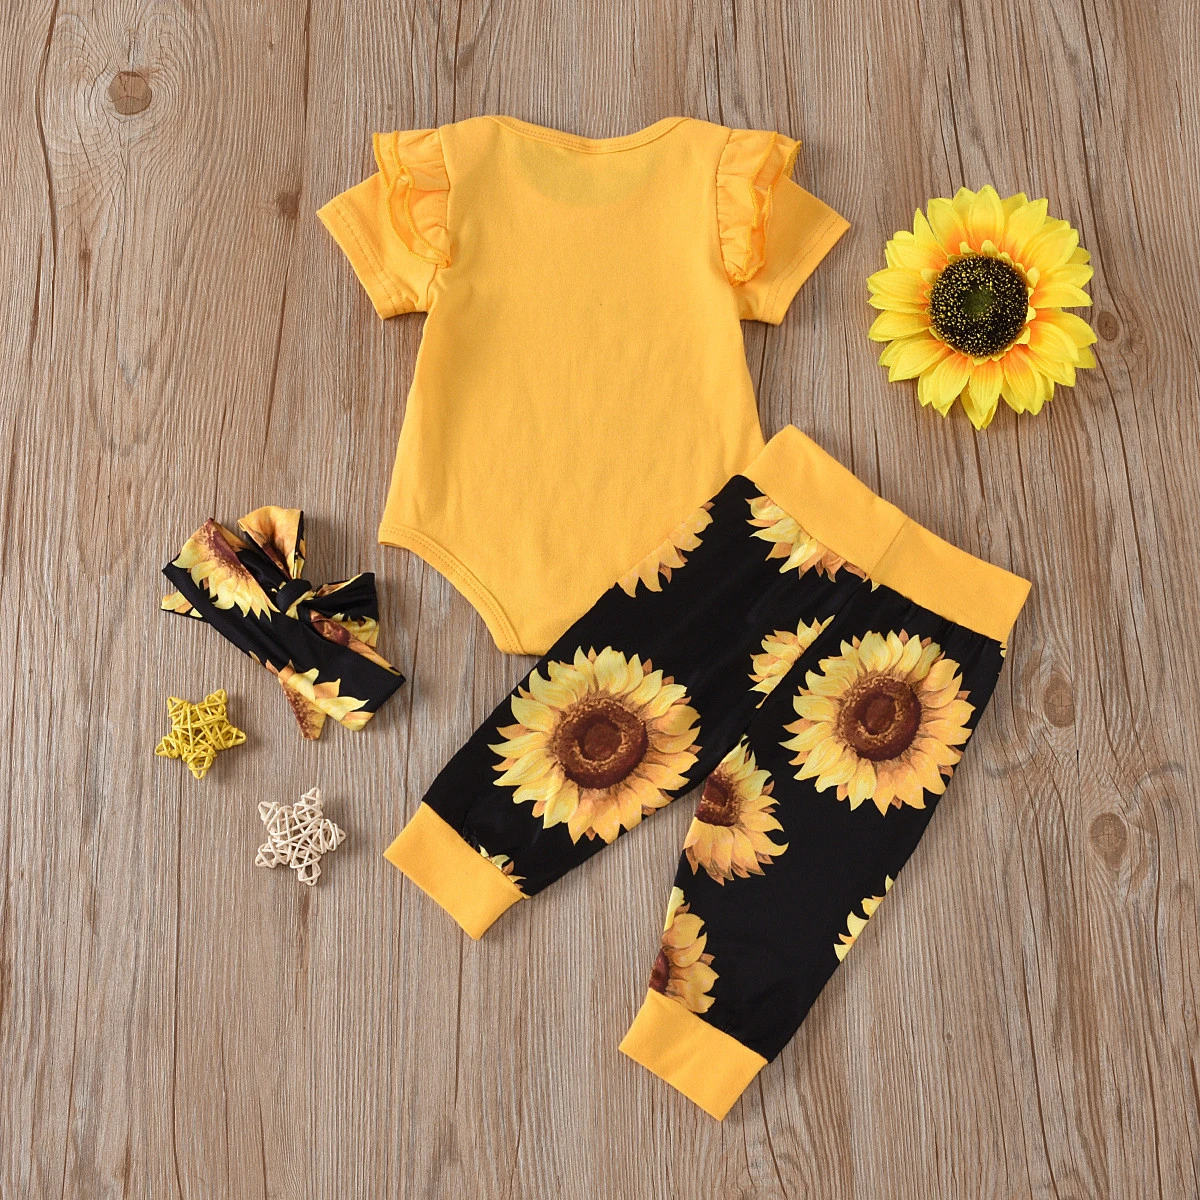 Newborn  Cute Clothing Set  Girl Letter Romper summer  Bodysuit Sunflower Print Pants Headband 3pcs Outfits